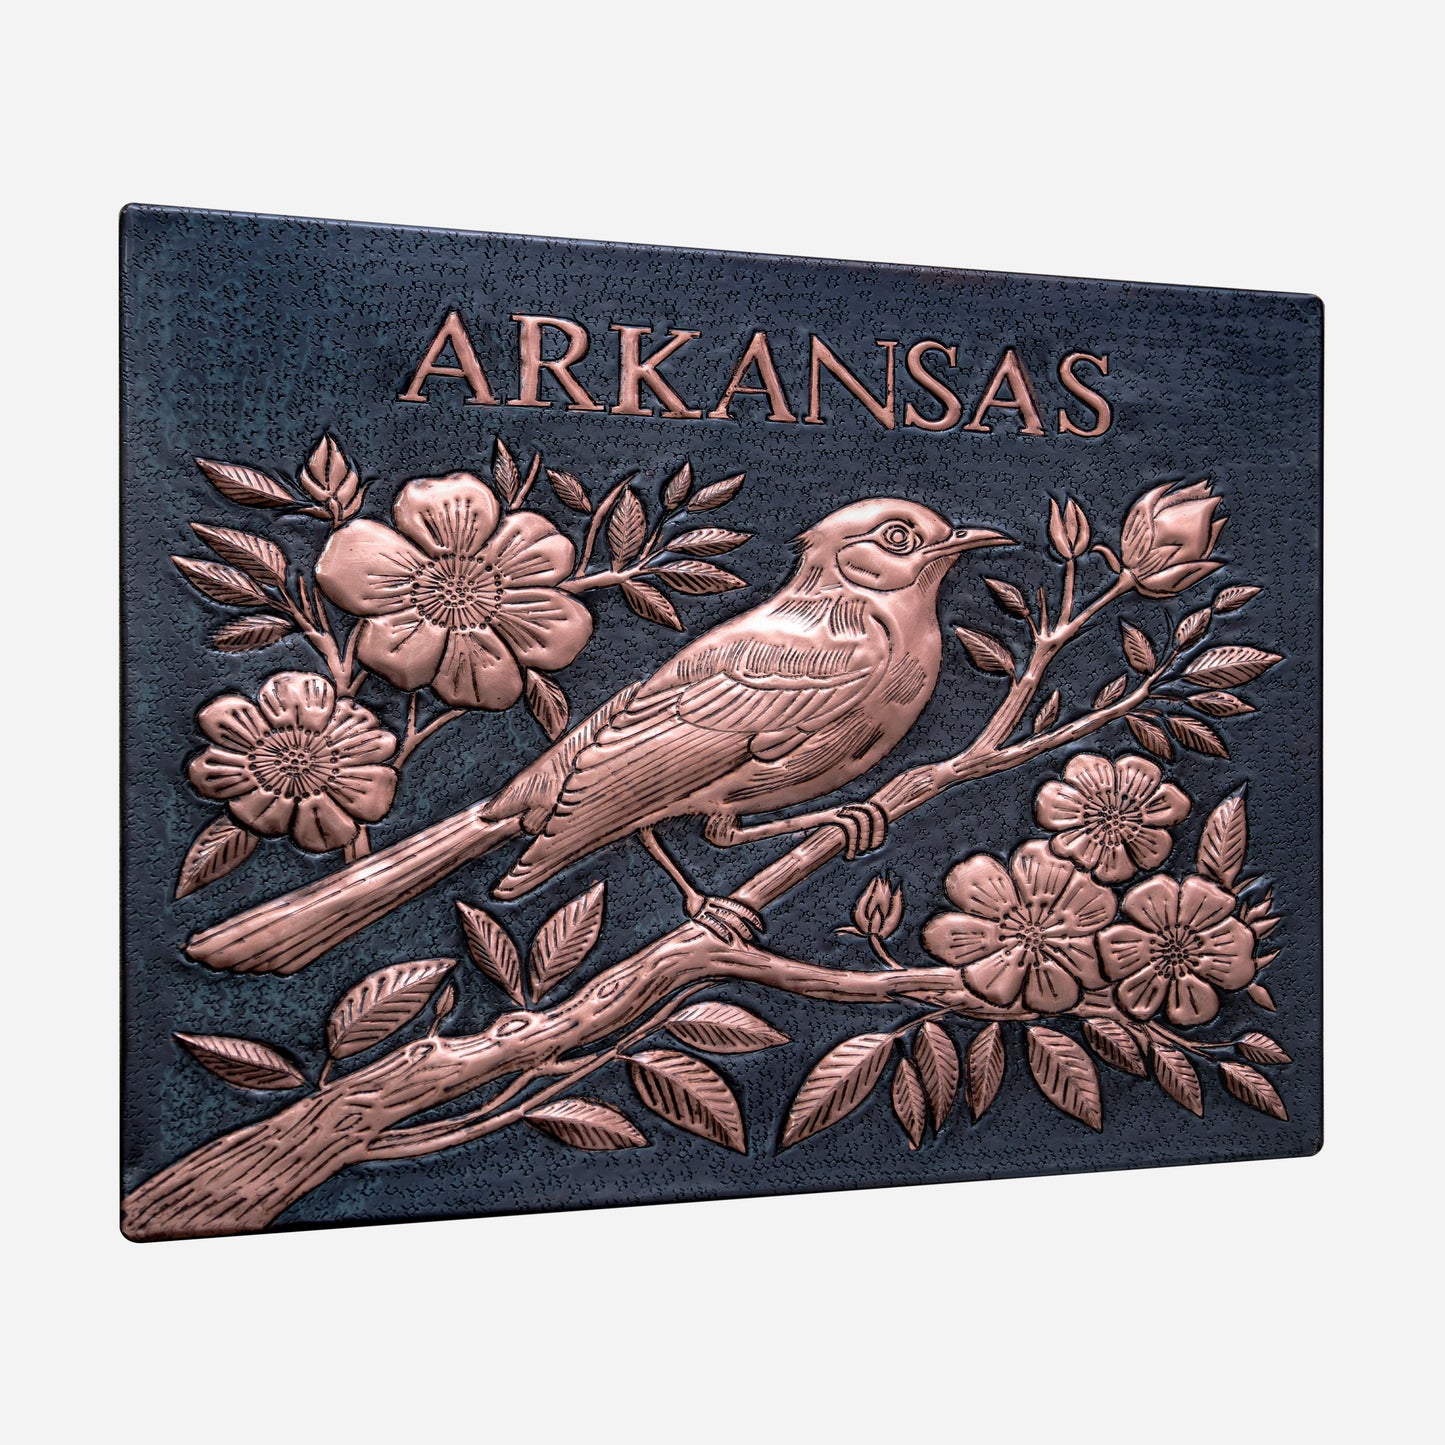 Arkansas Mockingbird Kitchen Backsplash Tile - 12"x16" Black